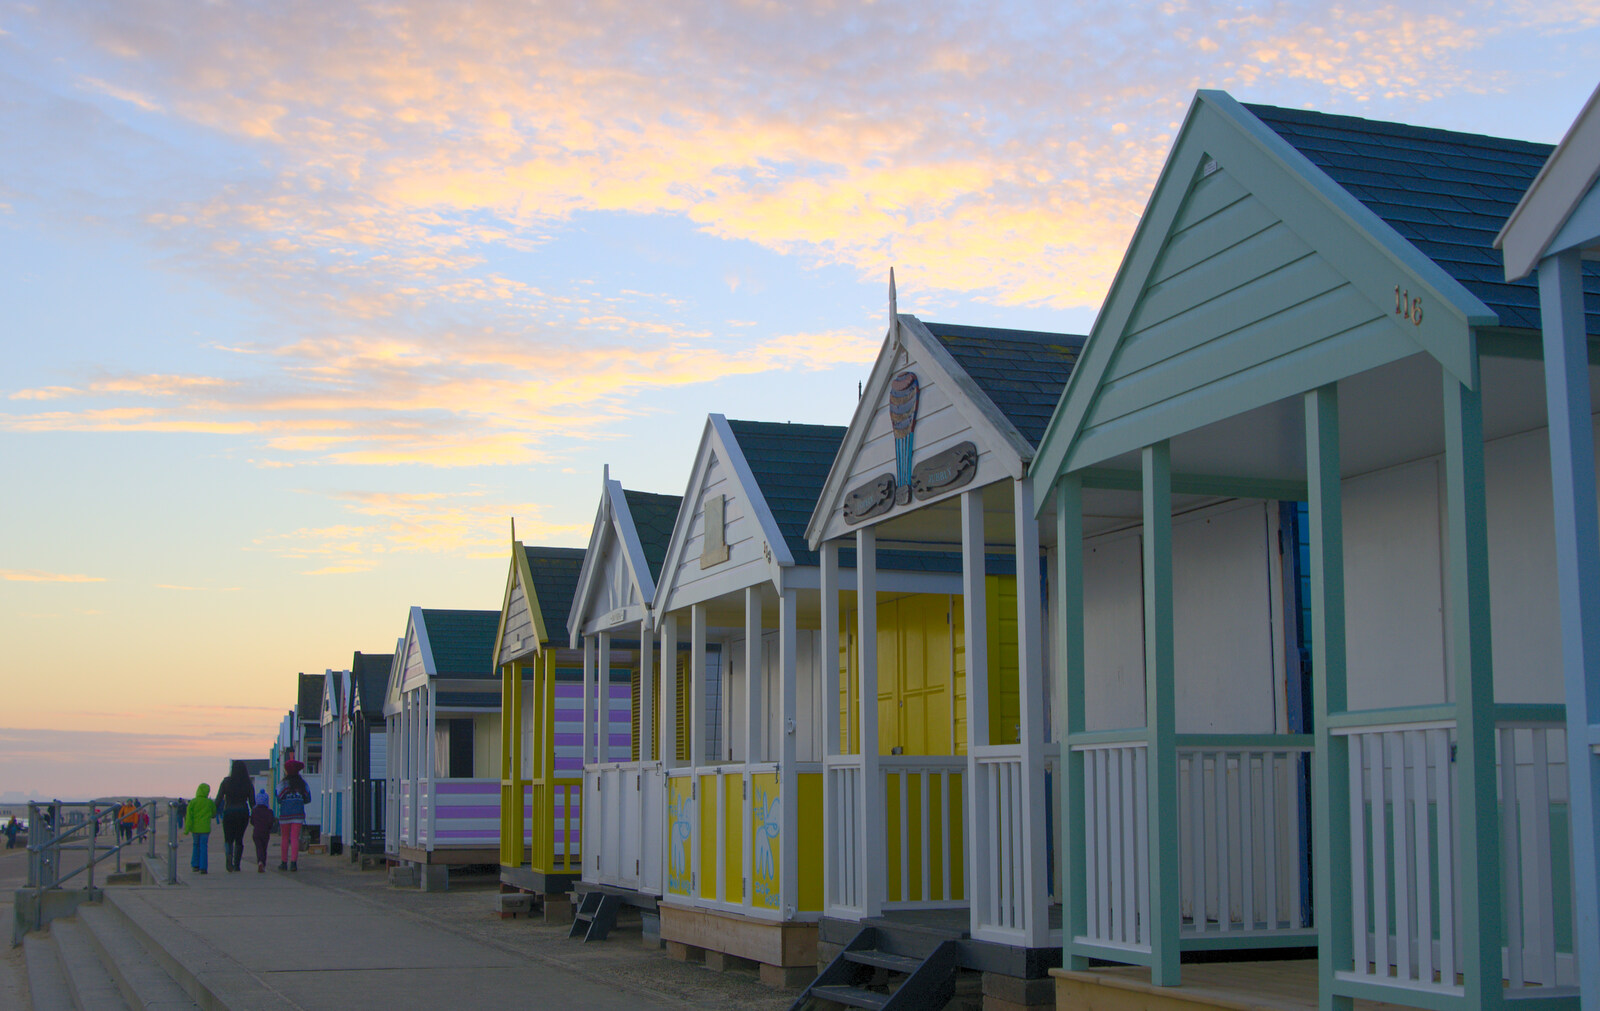 Sunset beach huts from Sunset on the Beach, Southwold, Suffolk - 30th December 2014